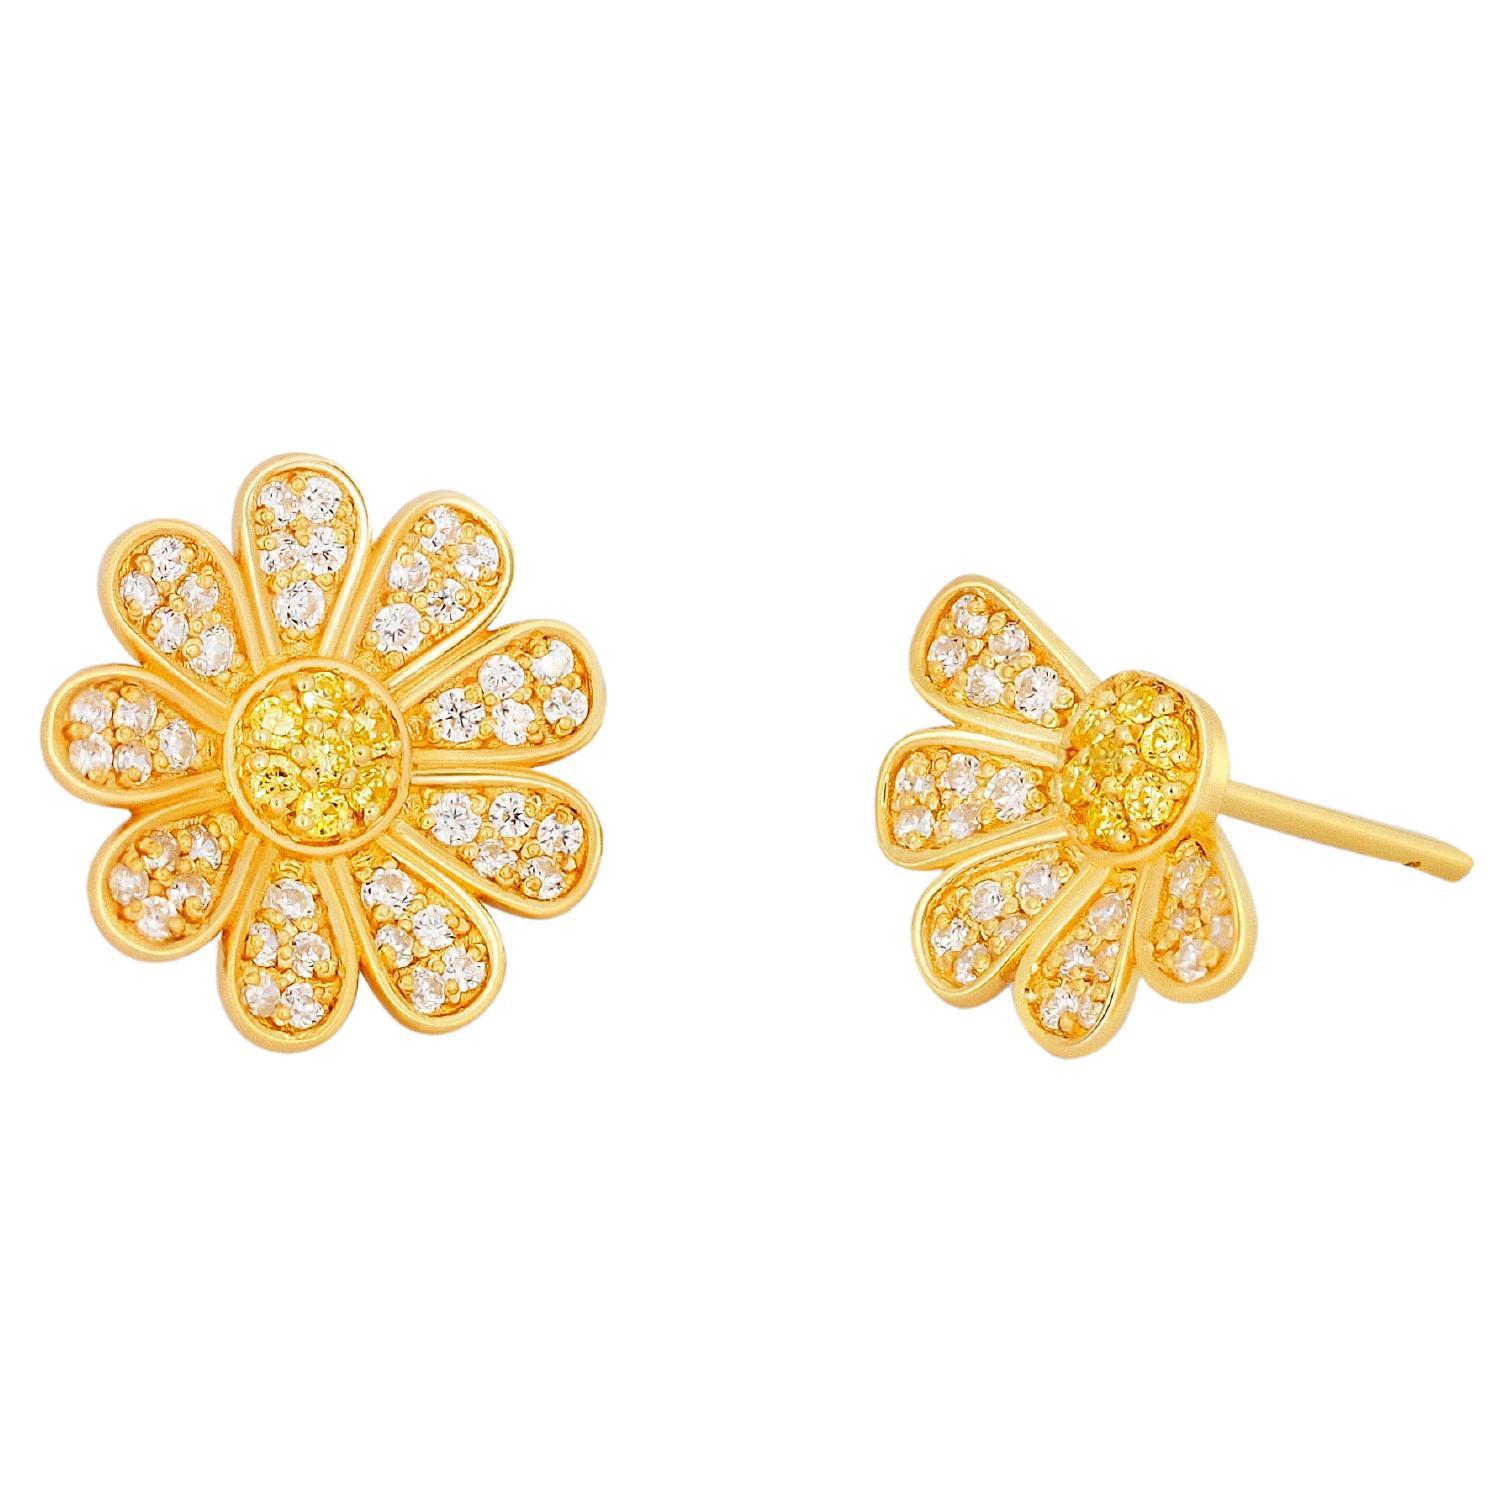 Daisy flower 14k gold earrings: Love Me, Love Me Not earrings studs For Sale